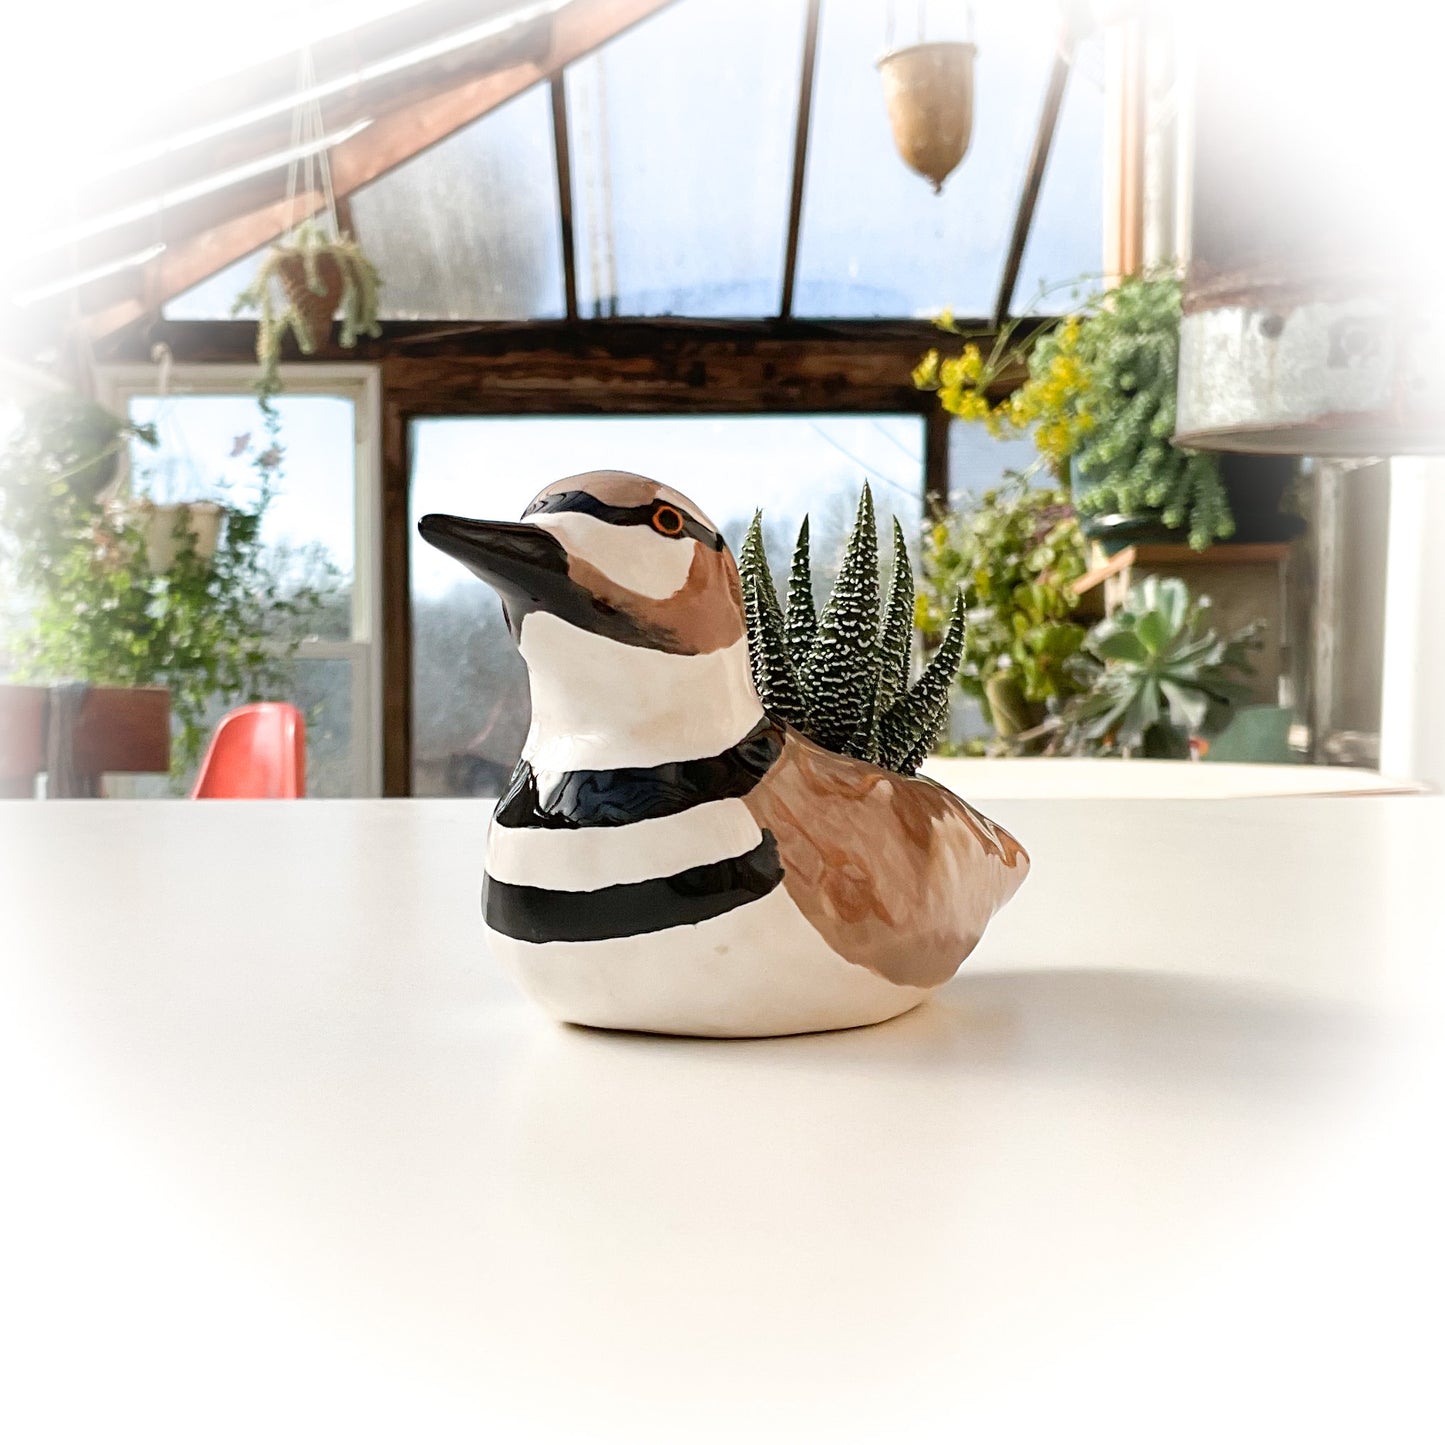 Killdeer Bird Pot - Ceramic Killdeer Planter